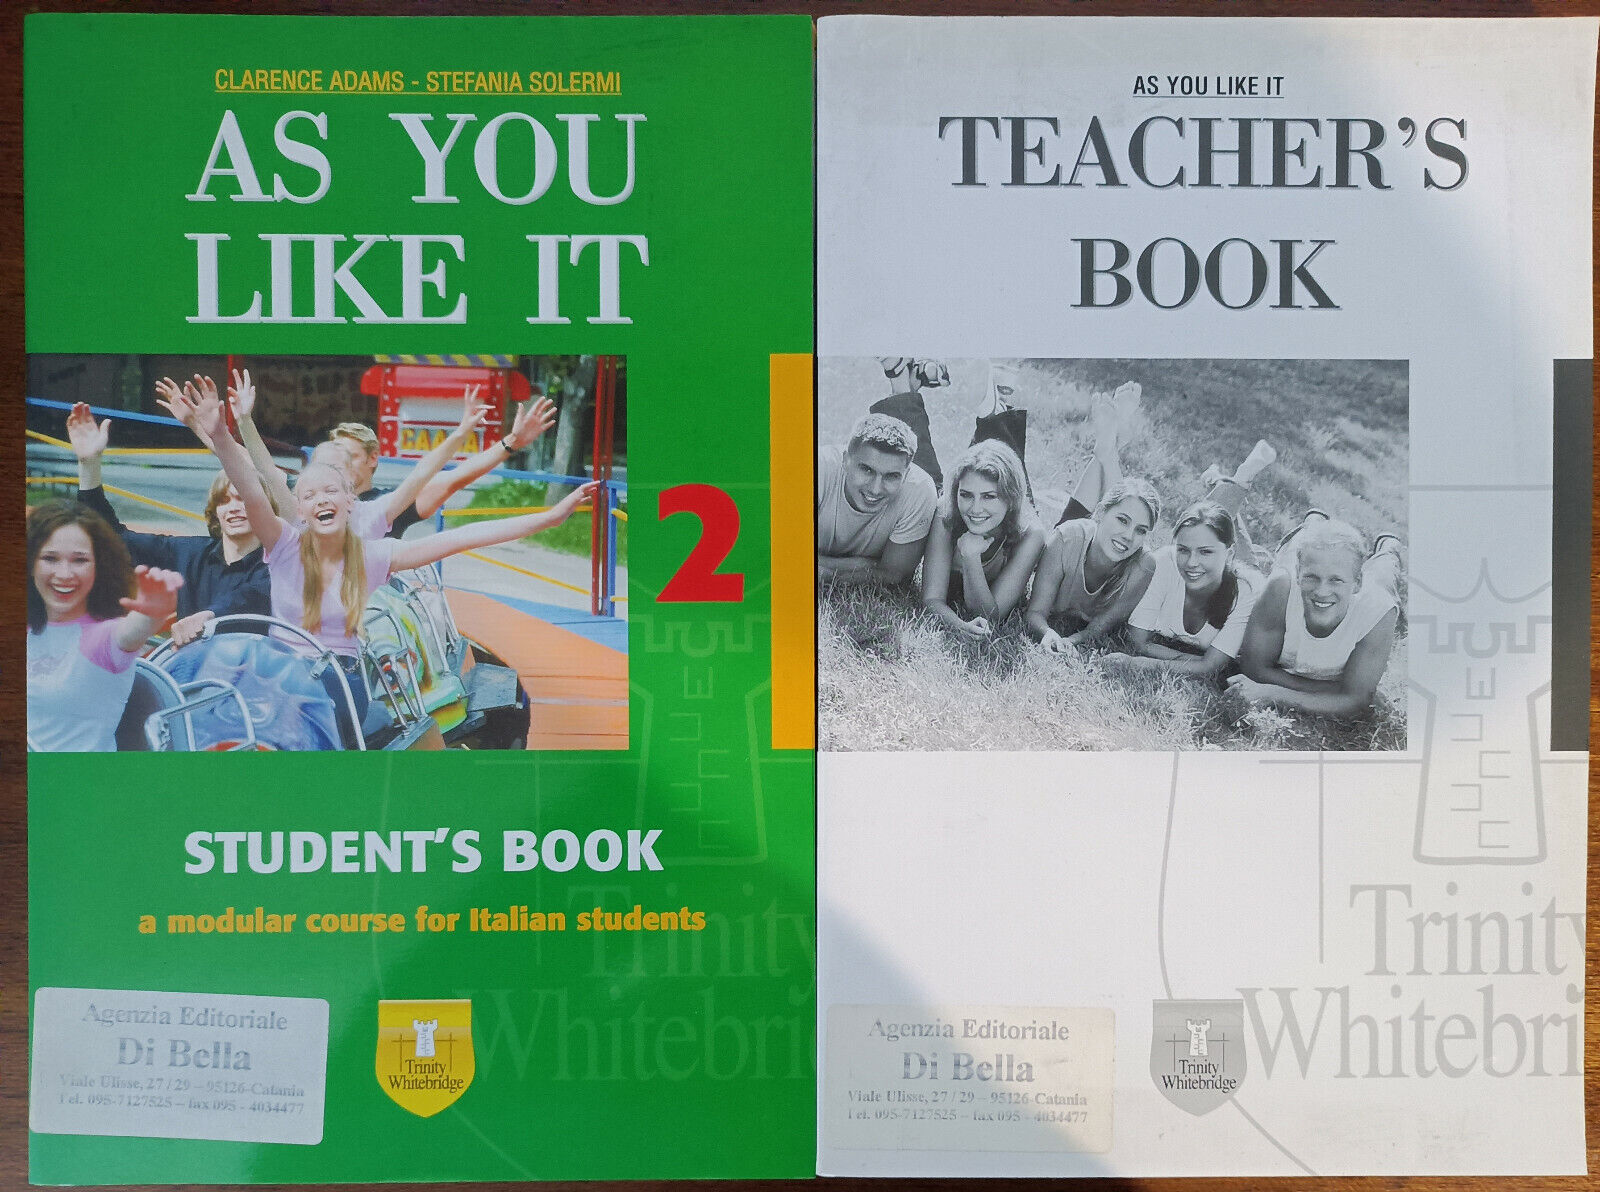 As you like it 2; Teacher's Book - Adams, Solermi - Trinity Whitebridge,2007 - A